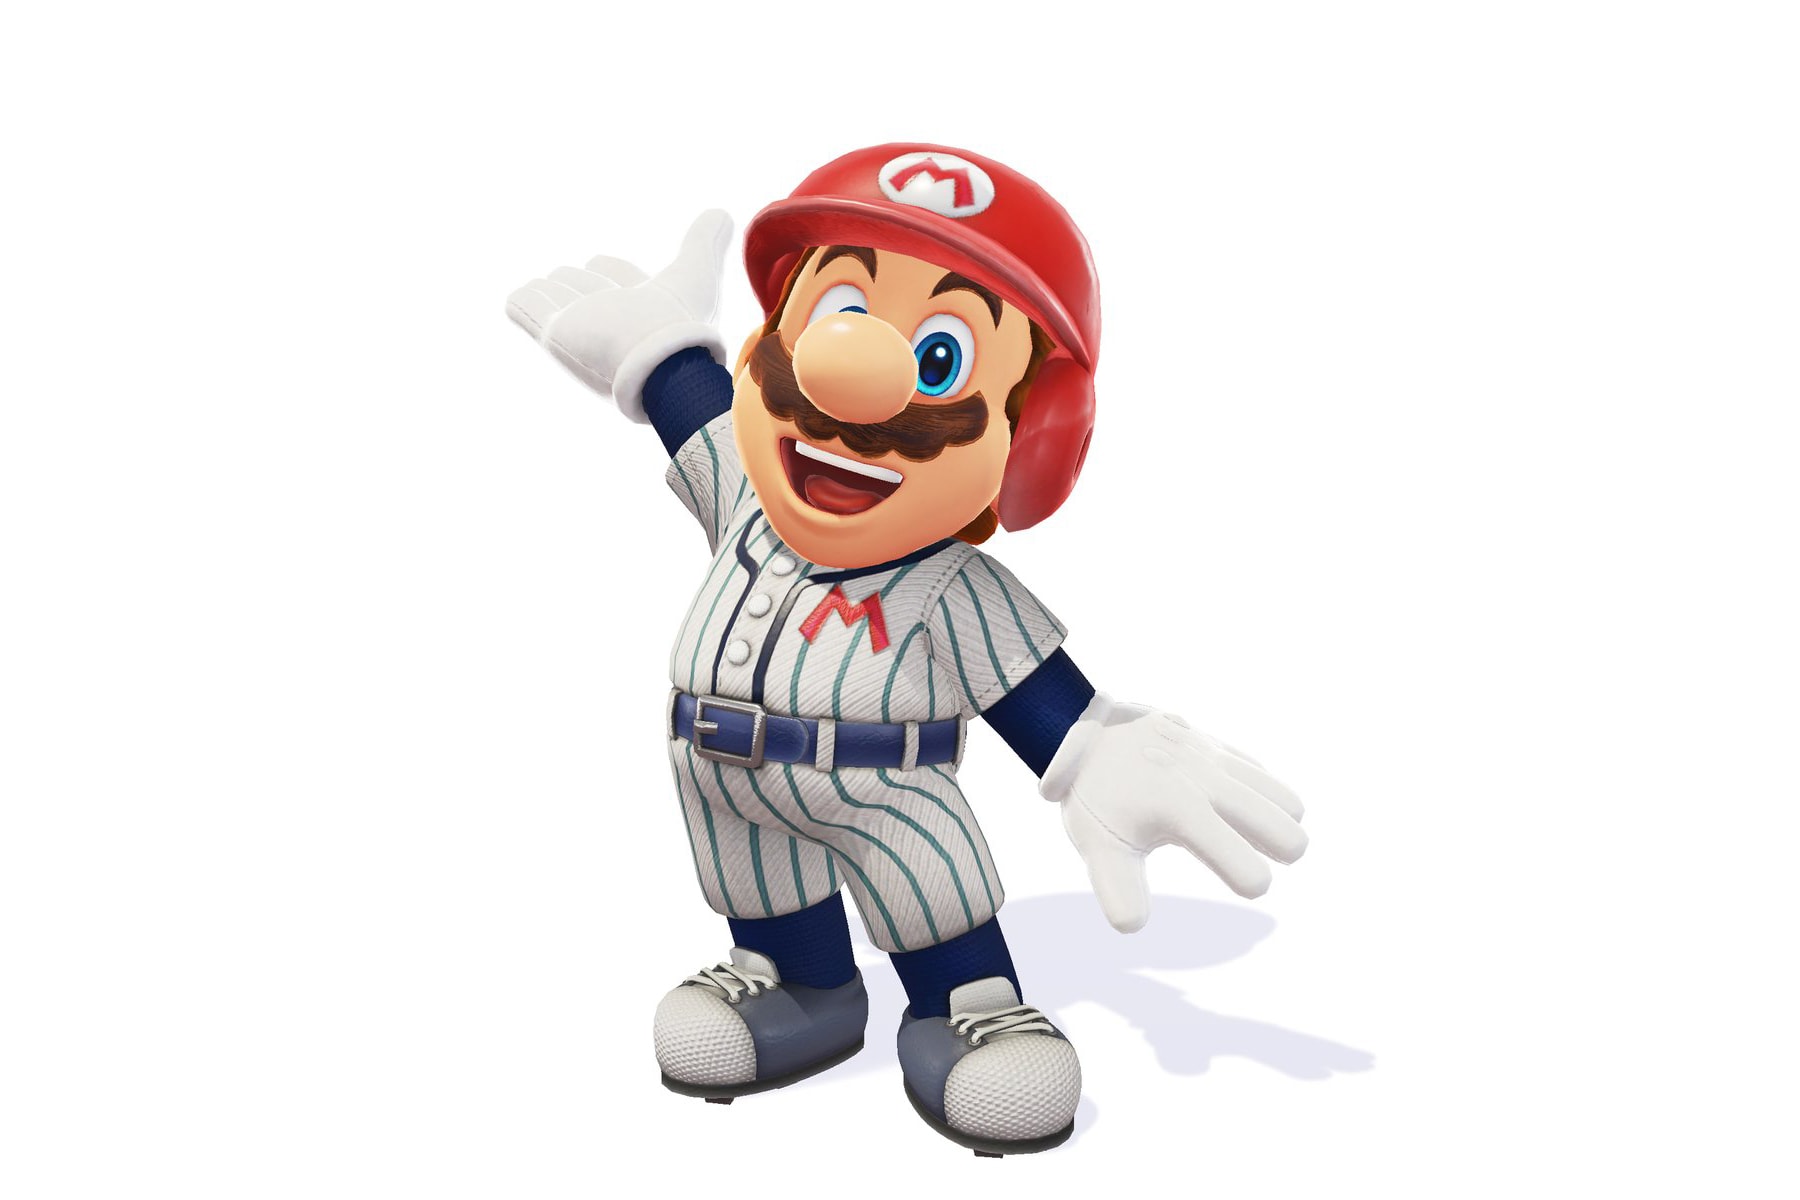 Super Mario Odyssey Super Nintendo Satellaview suit march 29 2018 japan famicom BS